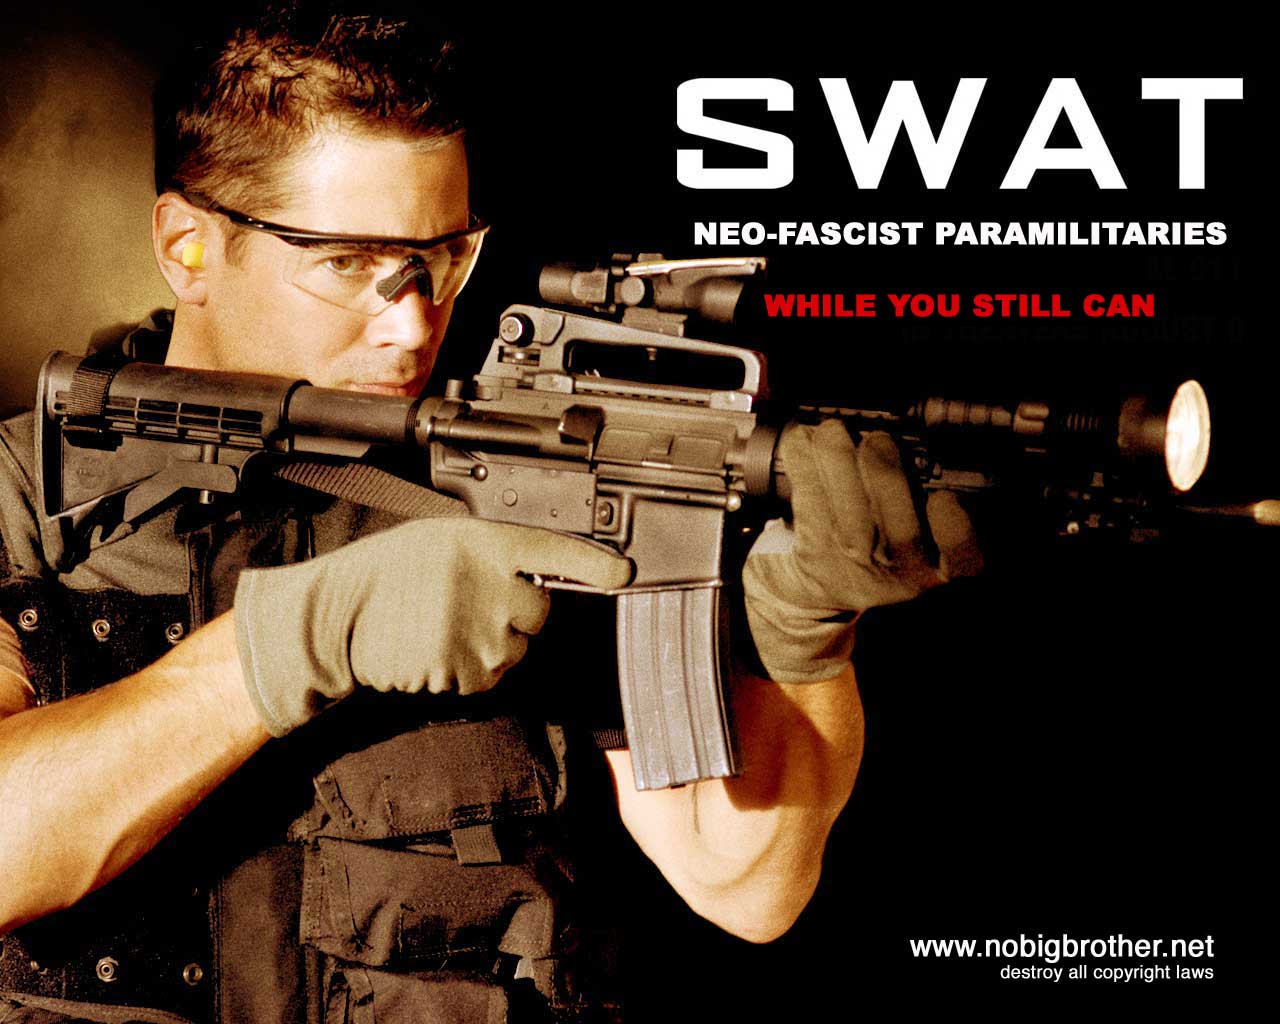 swat-neofascists.jpg 